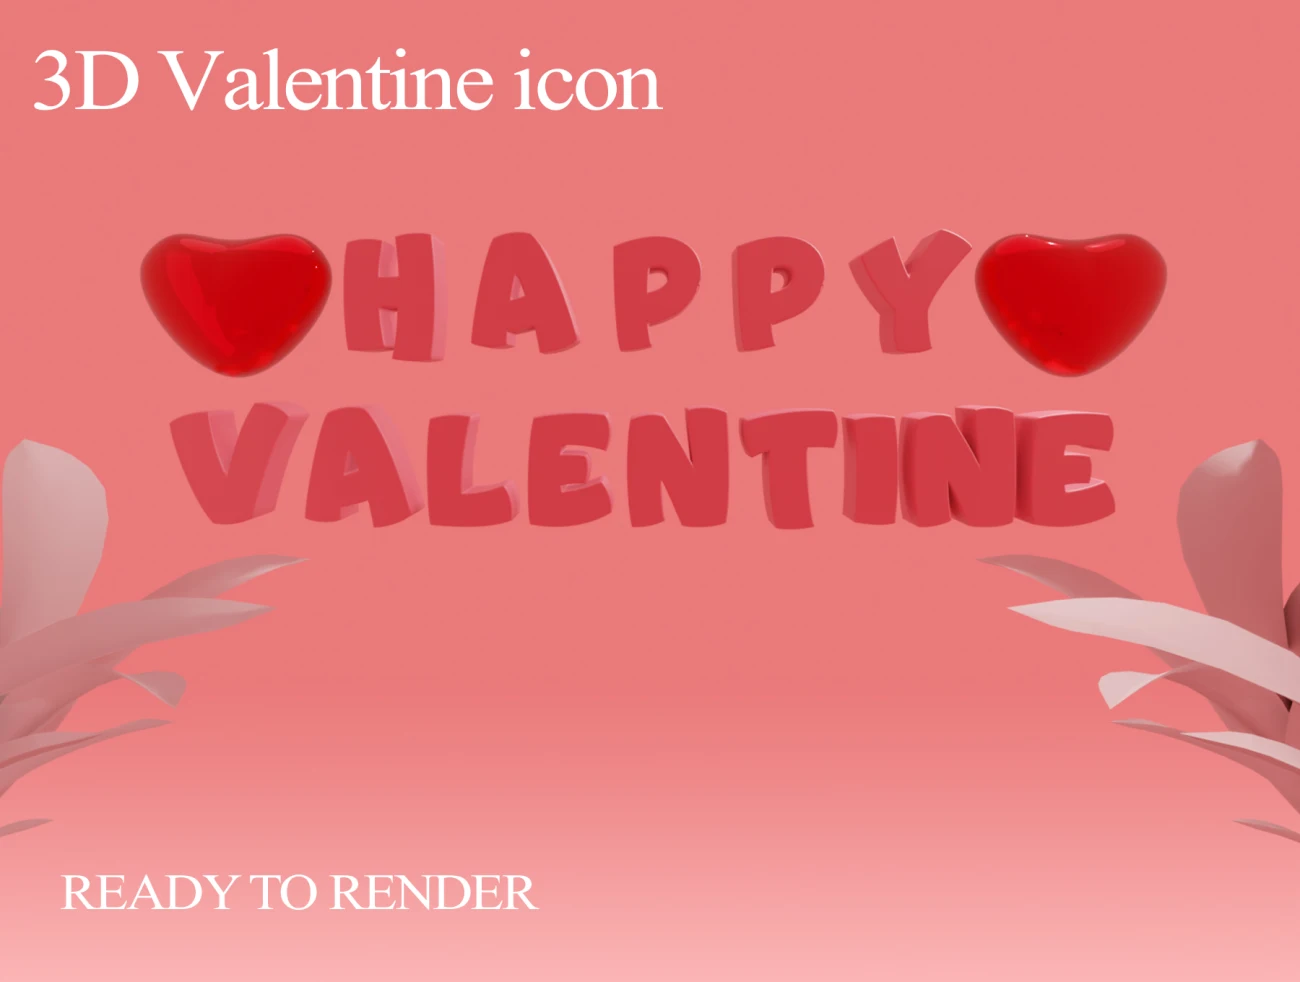 3D情人节图标素材下载 3D Valentine Icon .blender .png插图5